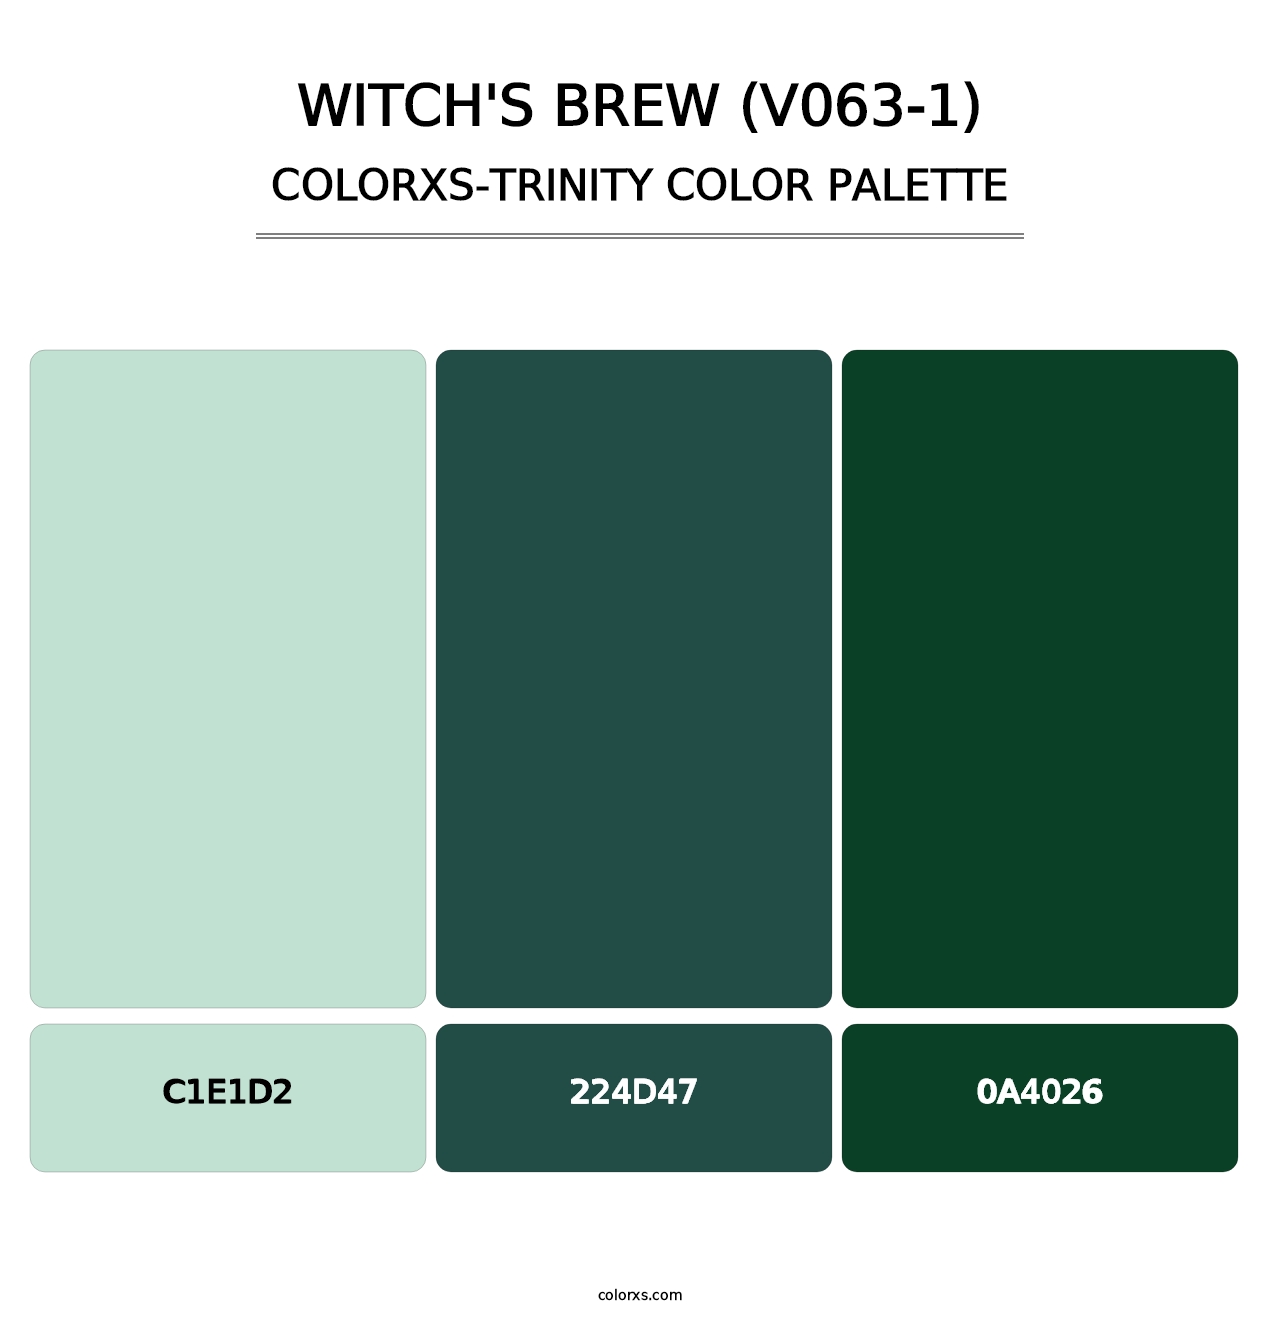 Witch's Brew (V063-1) - Colorxs Trinity Palette